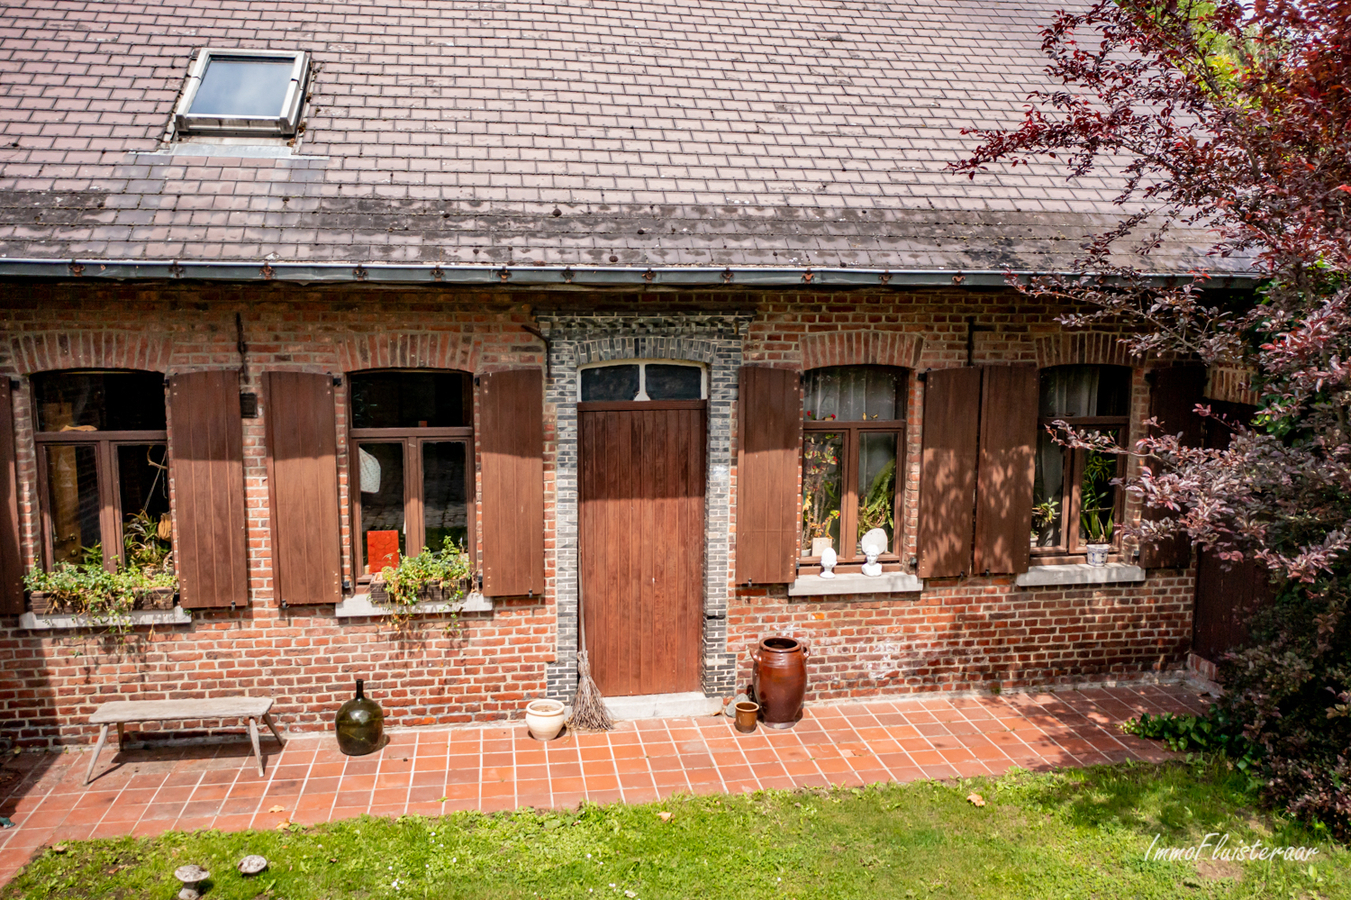 Property sold in Steenhuize-Wijnhuize